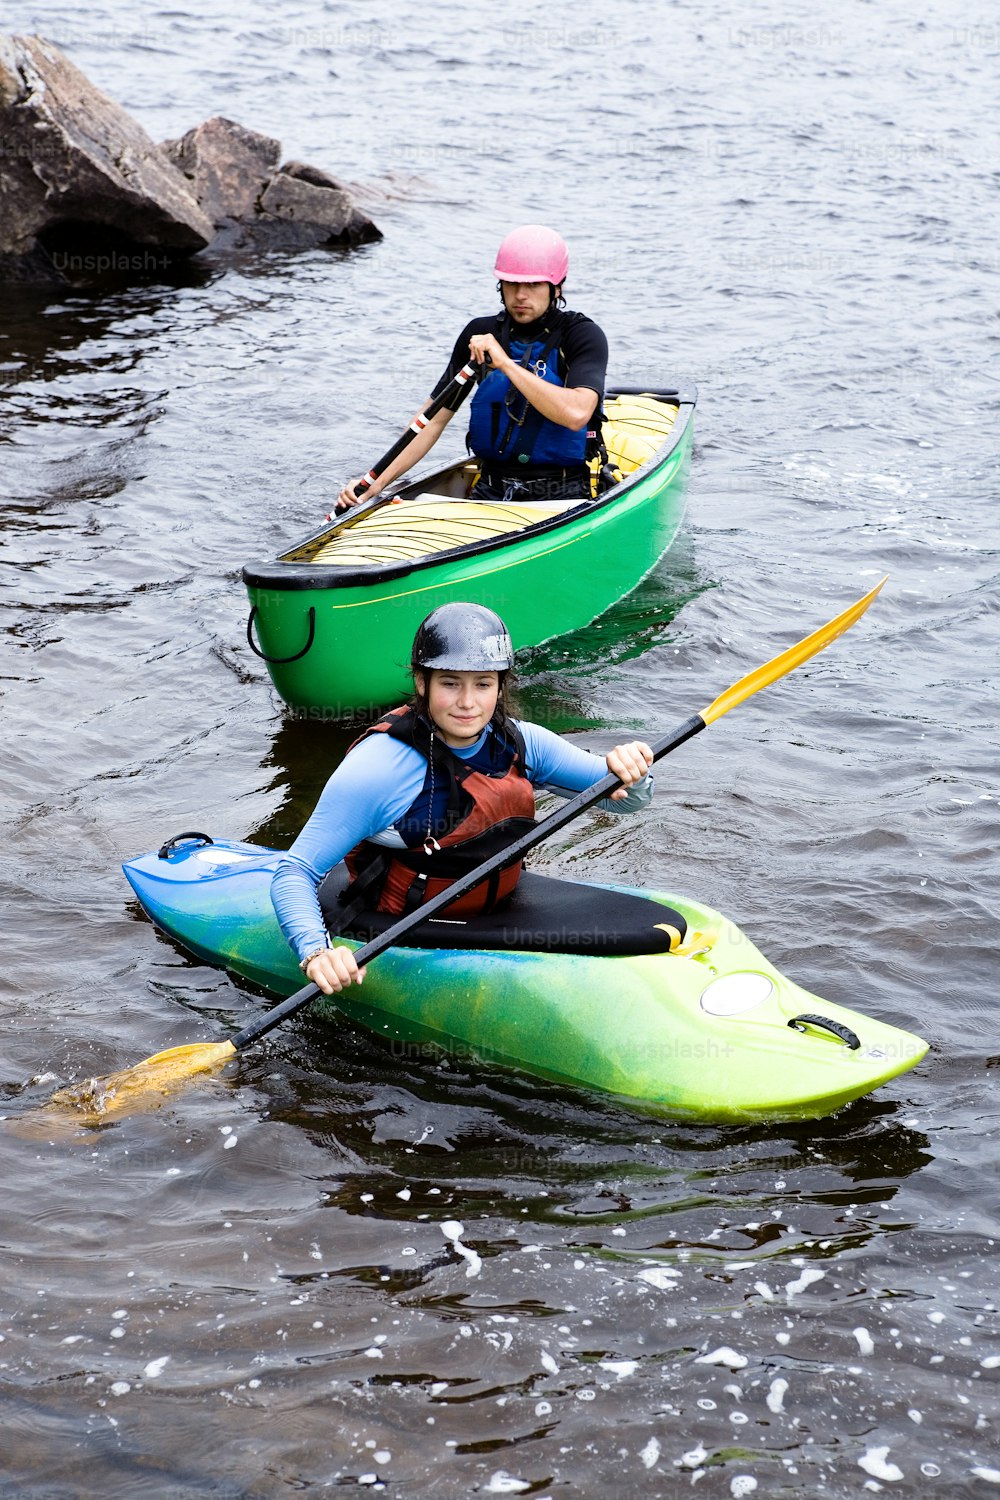 Zwei Personen in Kajaks paddeln auf dem Wasser